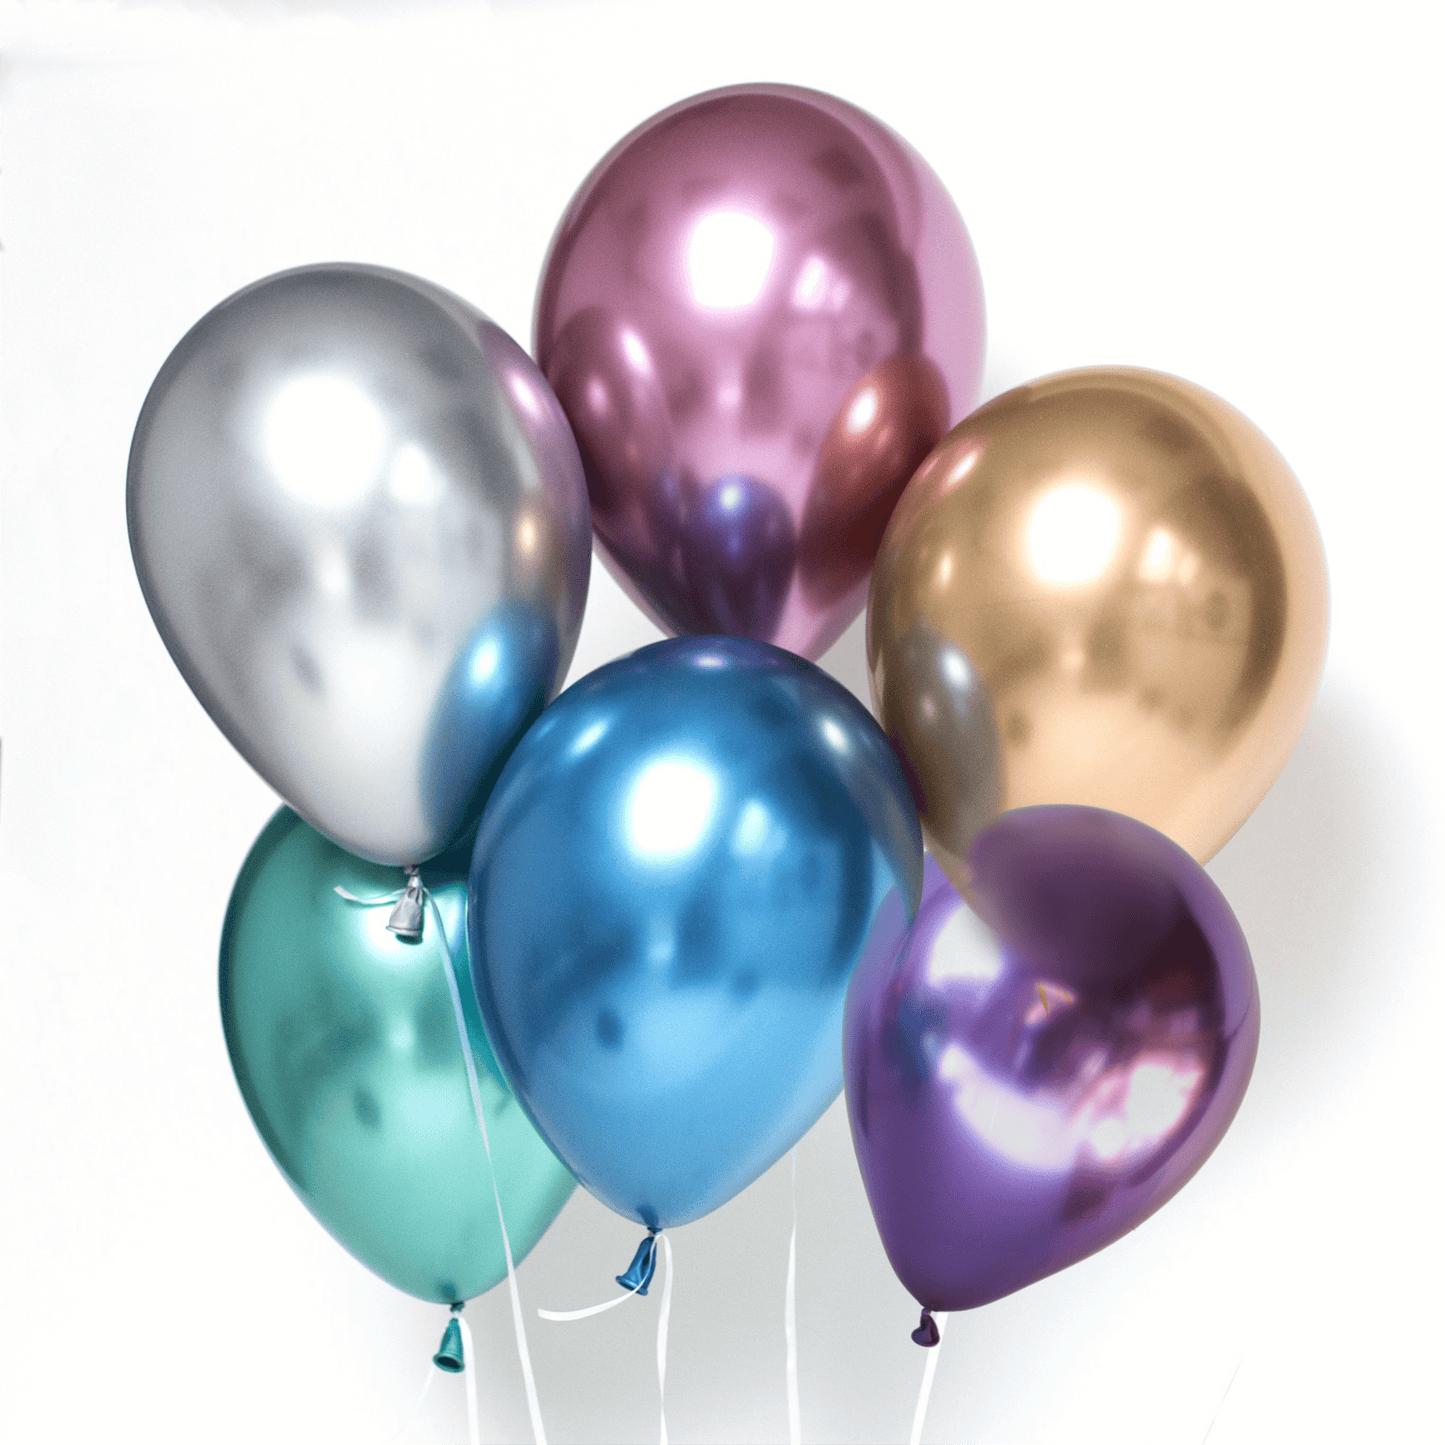 Chrome Balloons l Mattalic Latex Balloons | Qualatex Chrome Balloons Qualatex